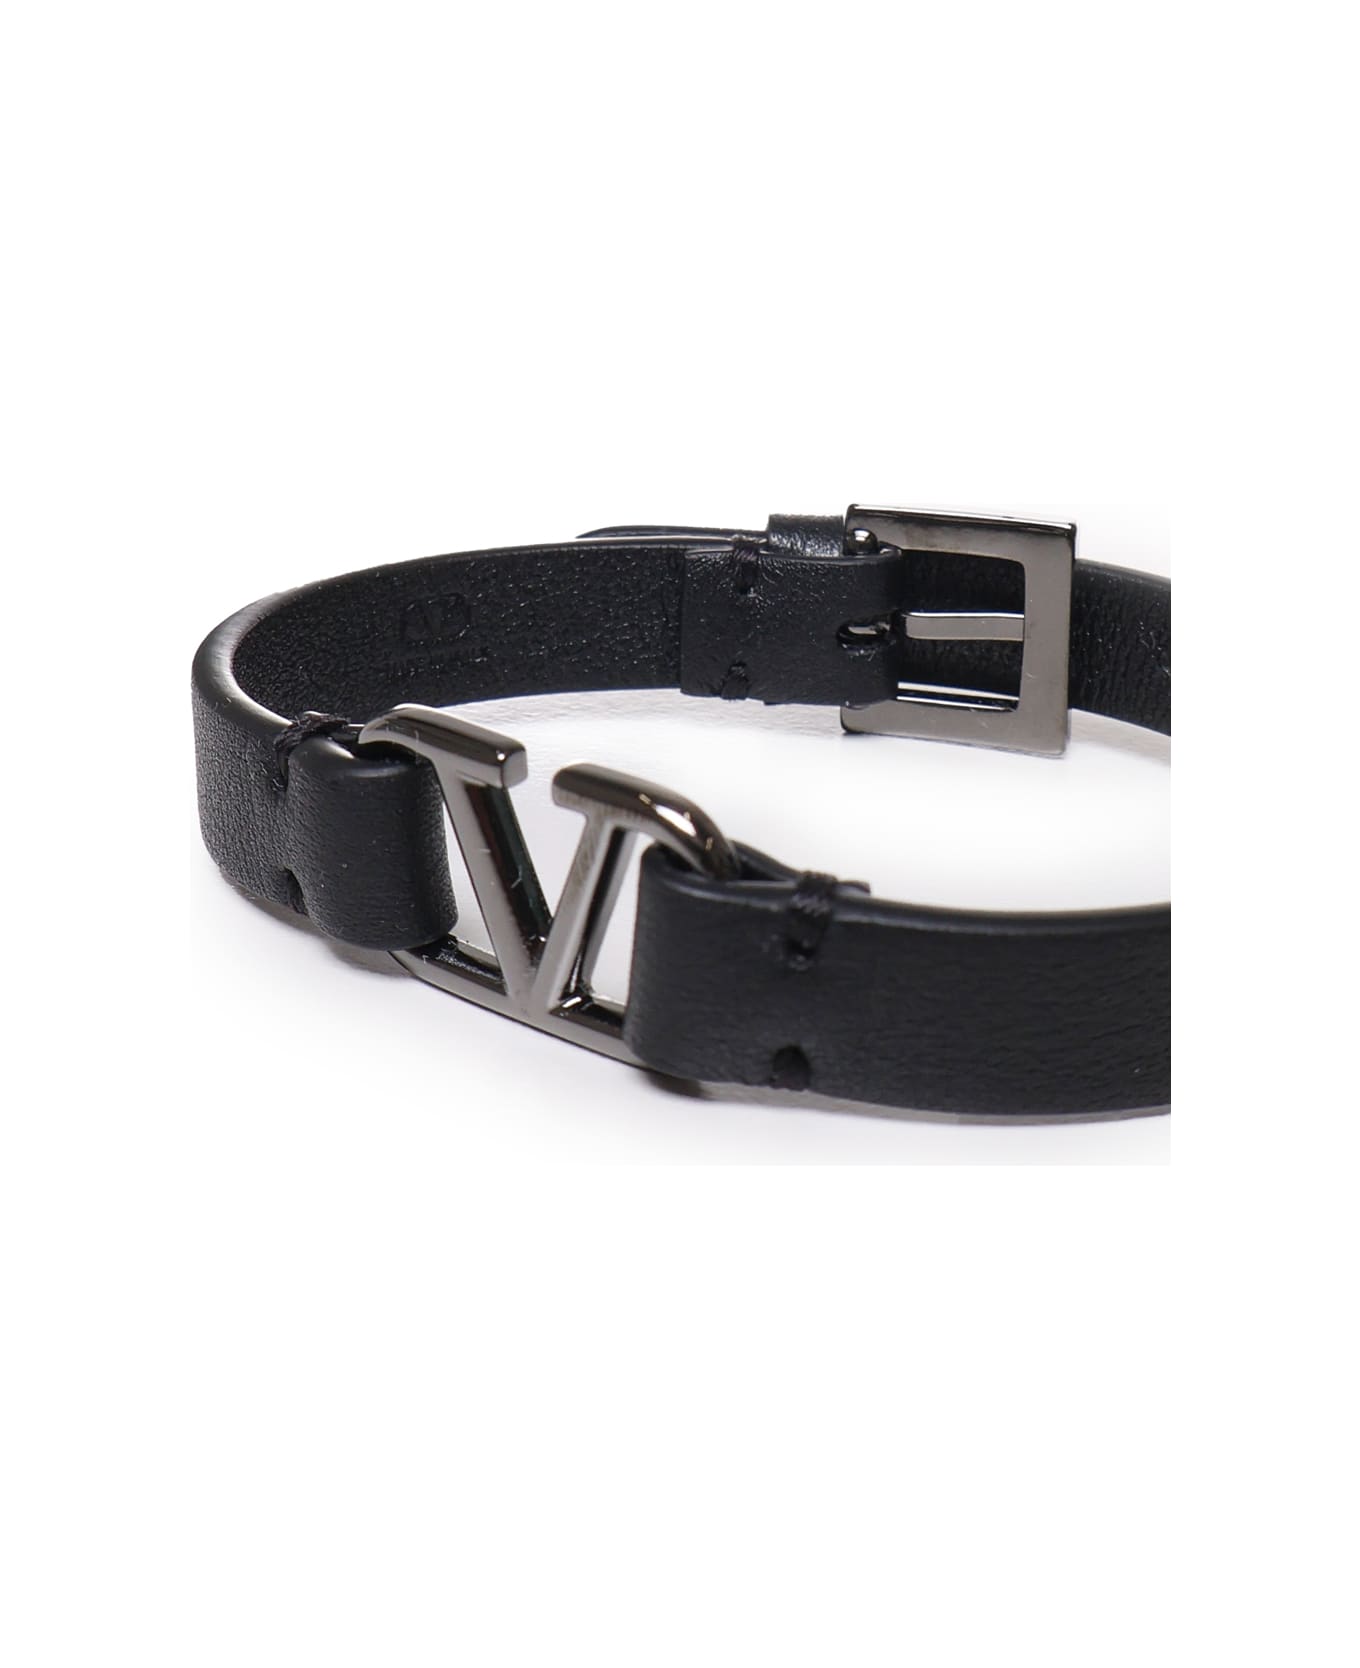 Valentino Garavani Vlogo Leather Bracelet - Black